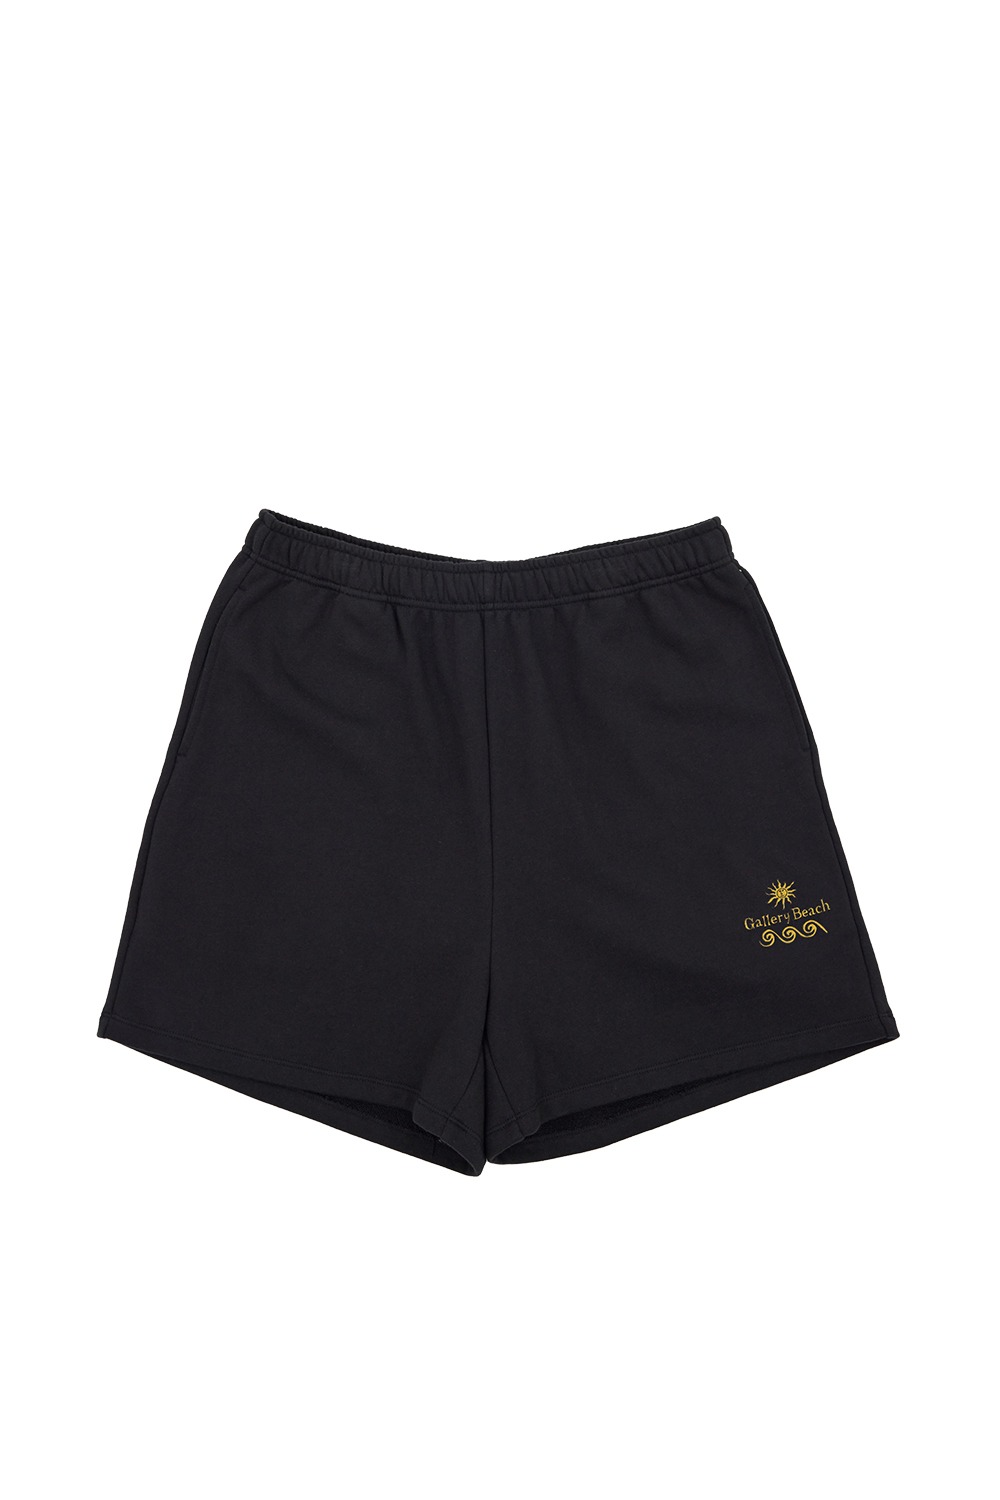 Gallery Beach Sweat Shorts - Black